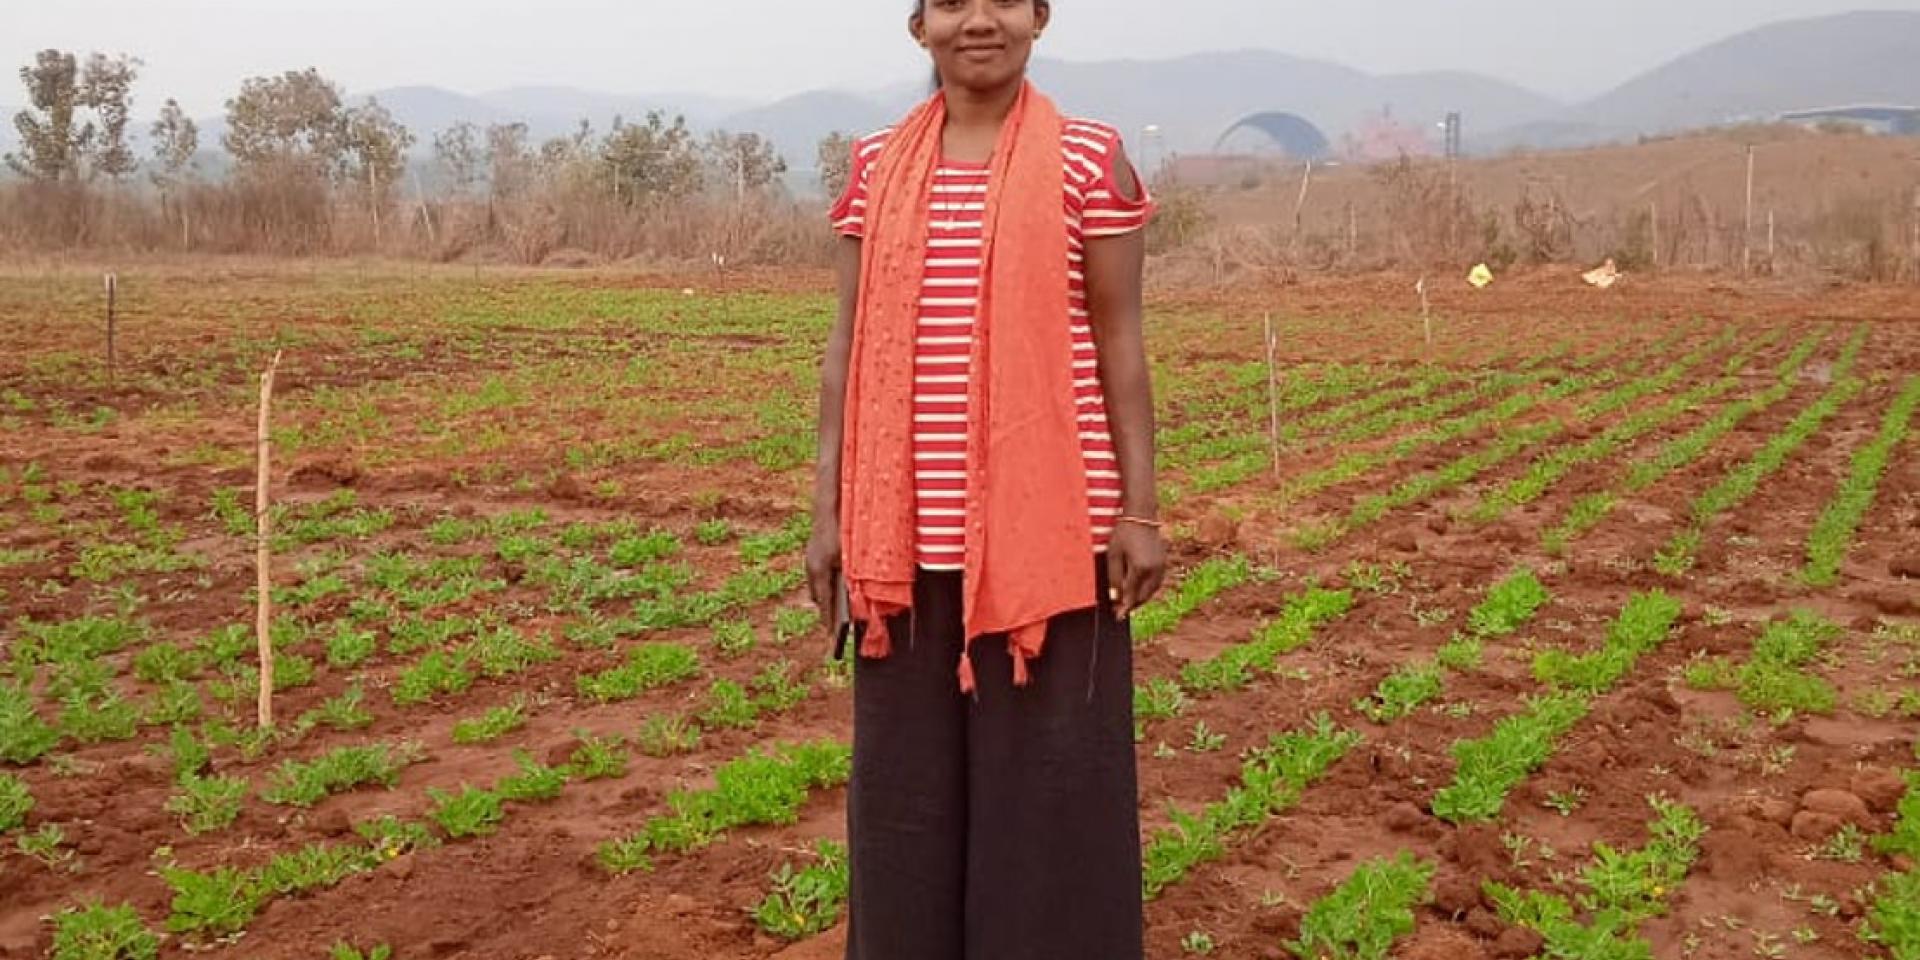 Woman groundnut farmer in Odisha, India